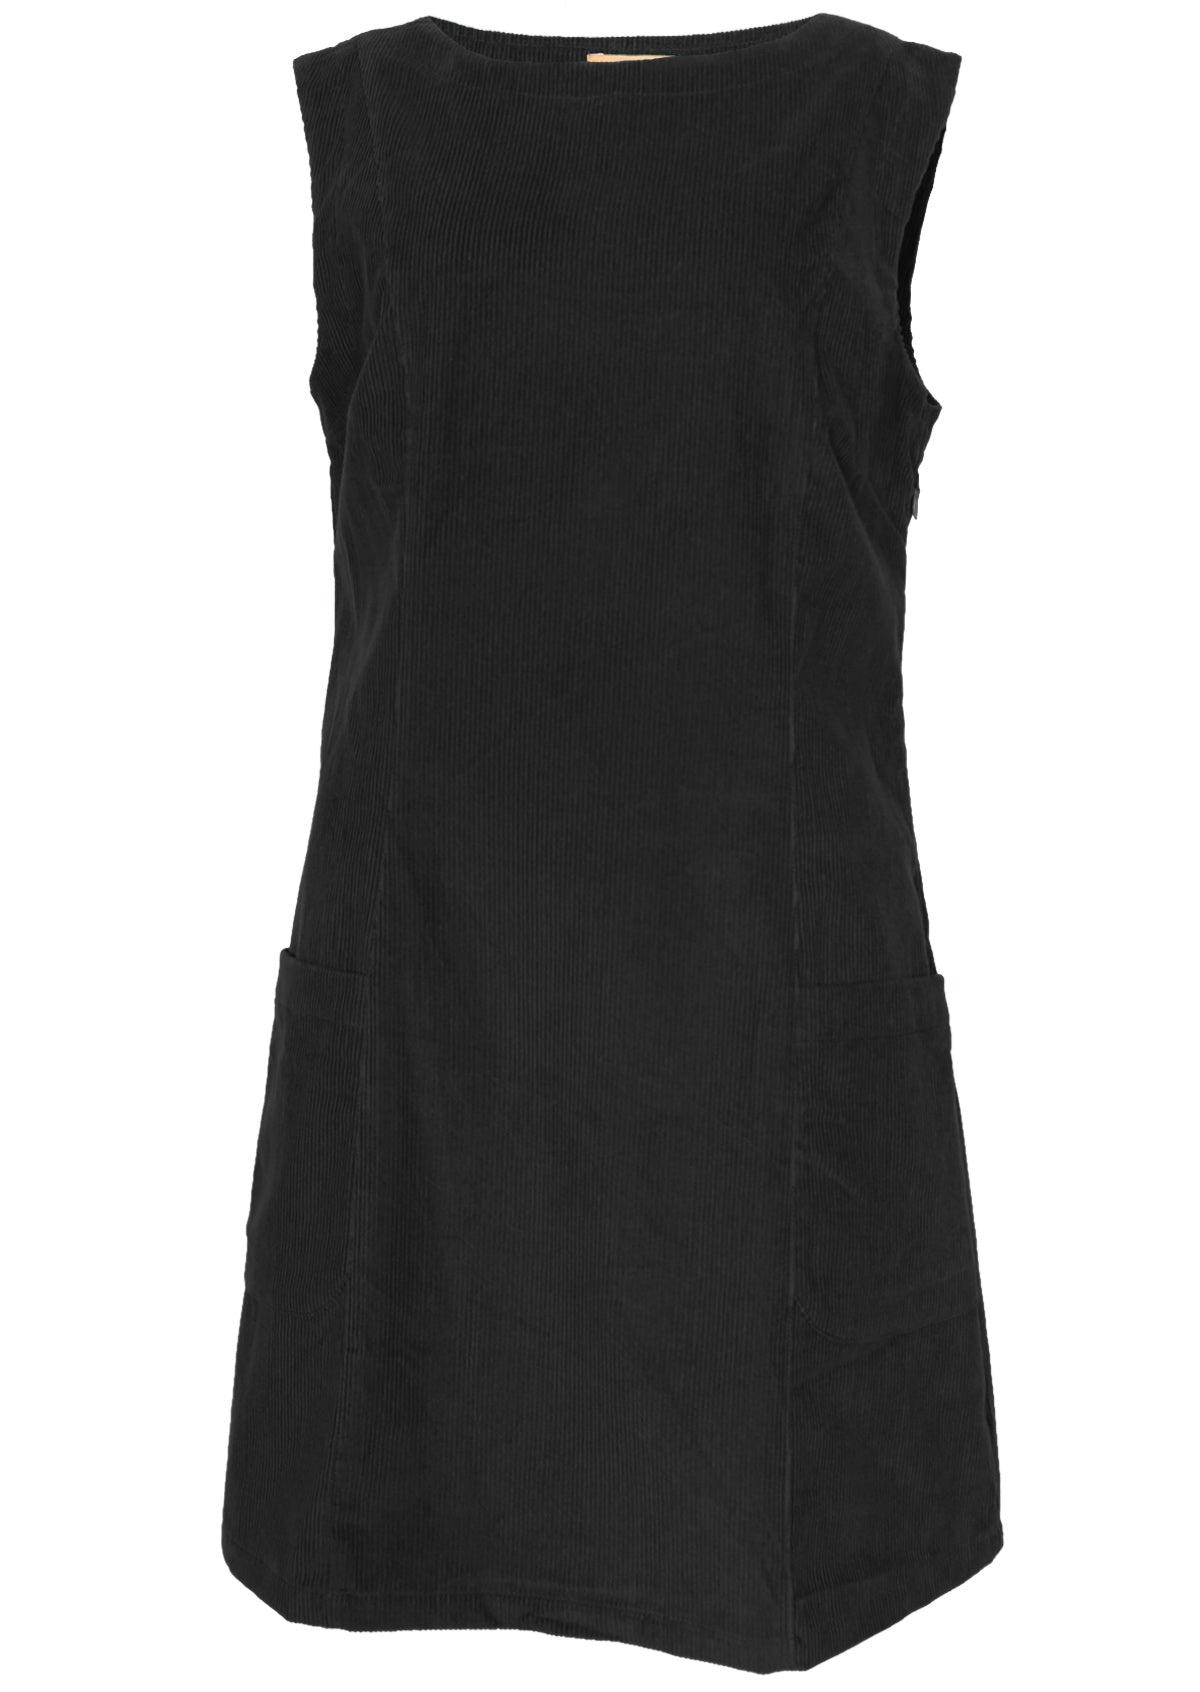 sleeveless cotton corduroy dress designed in Australia